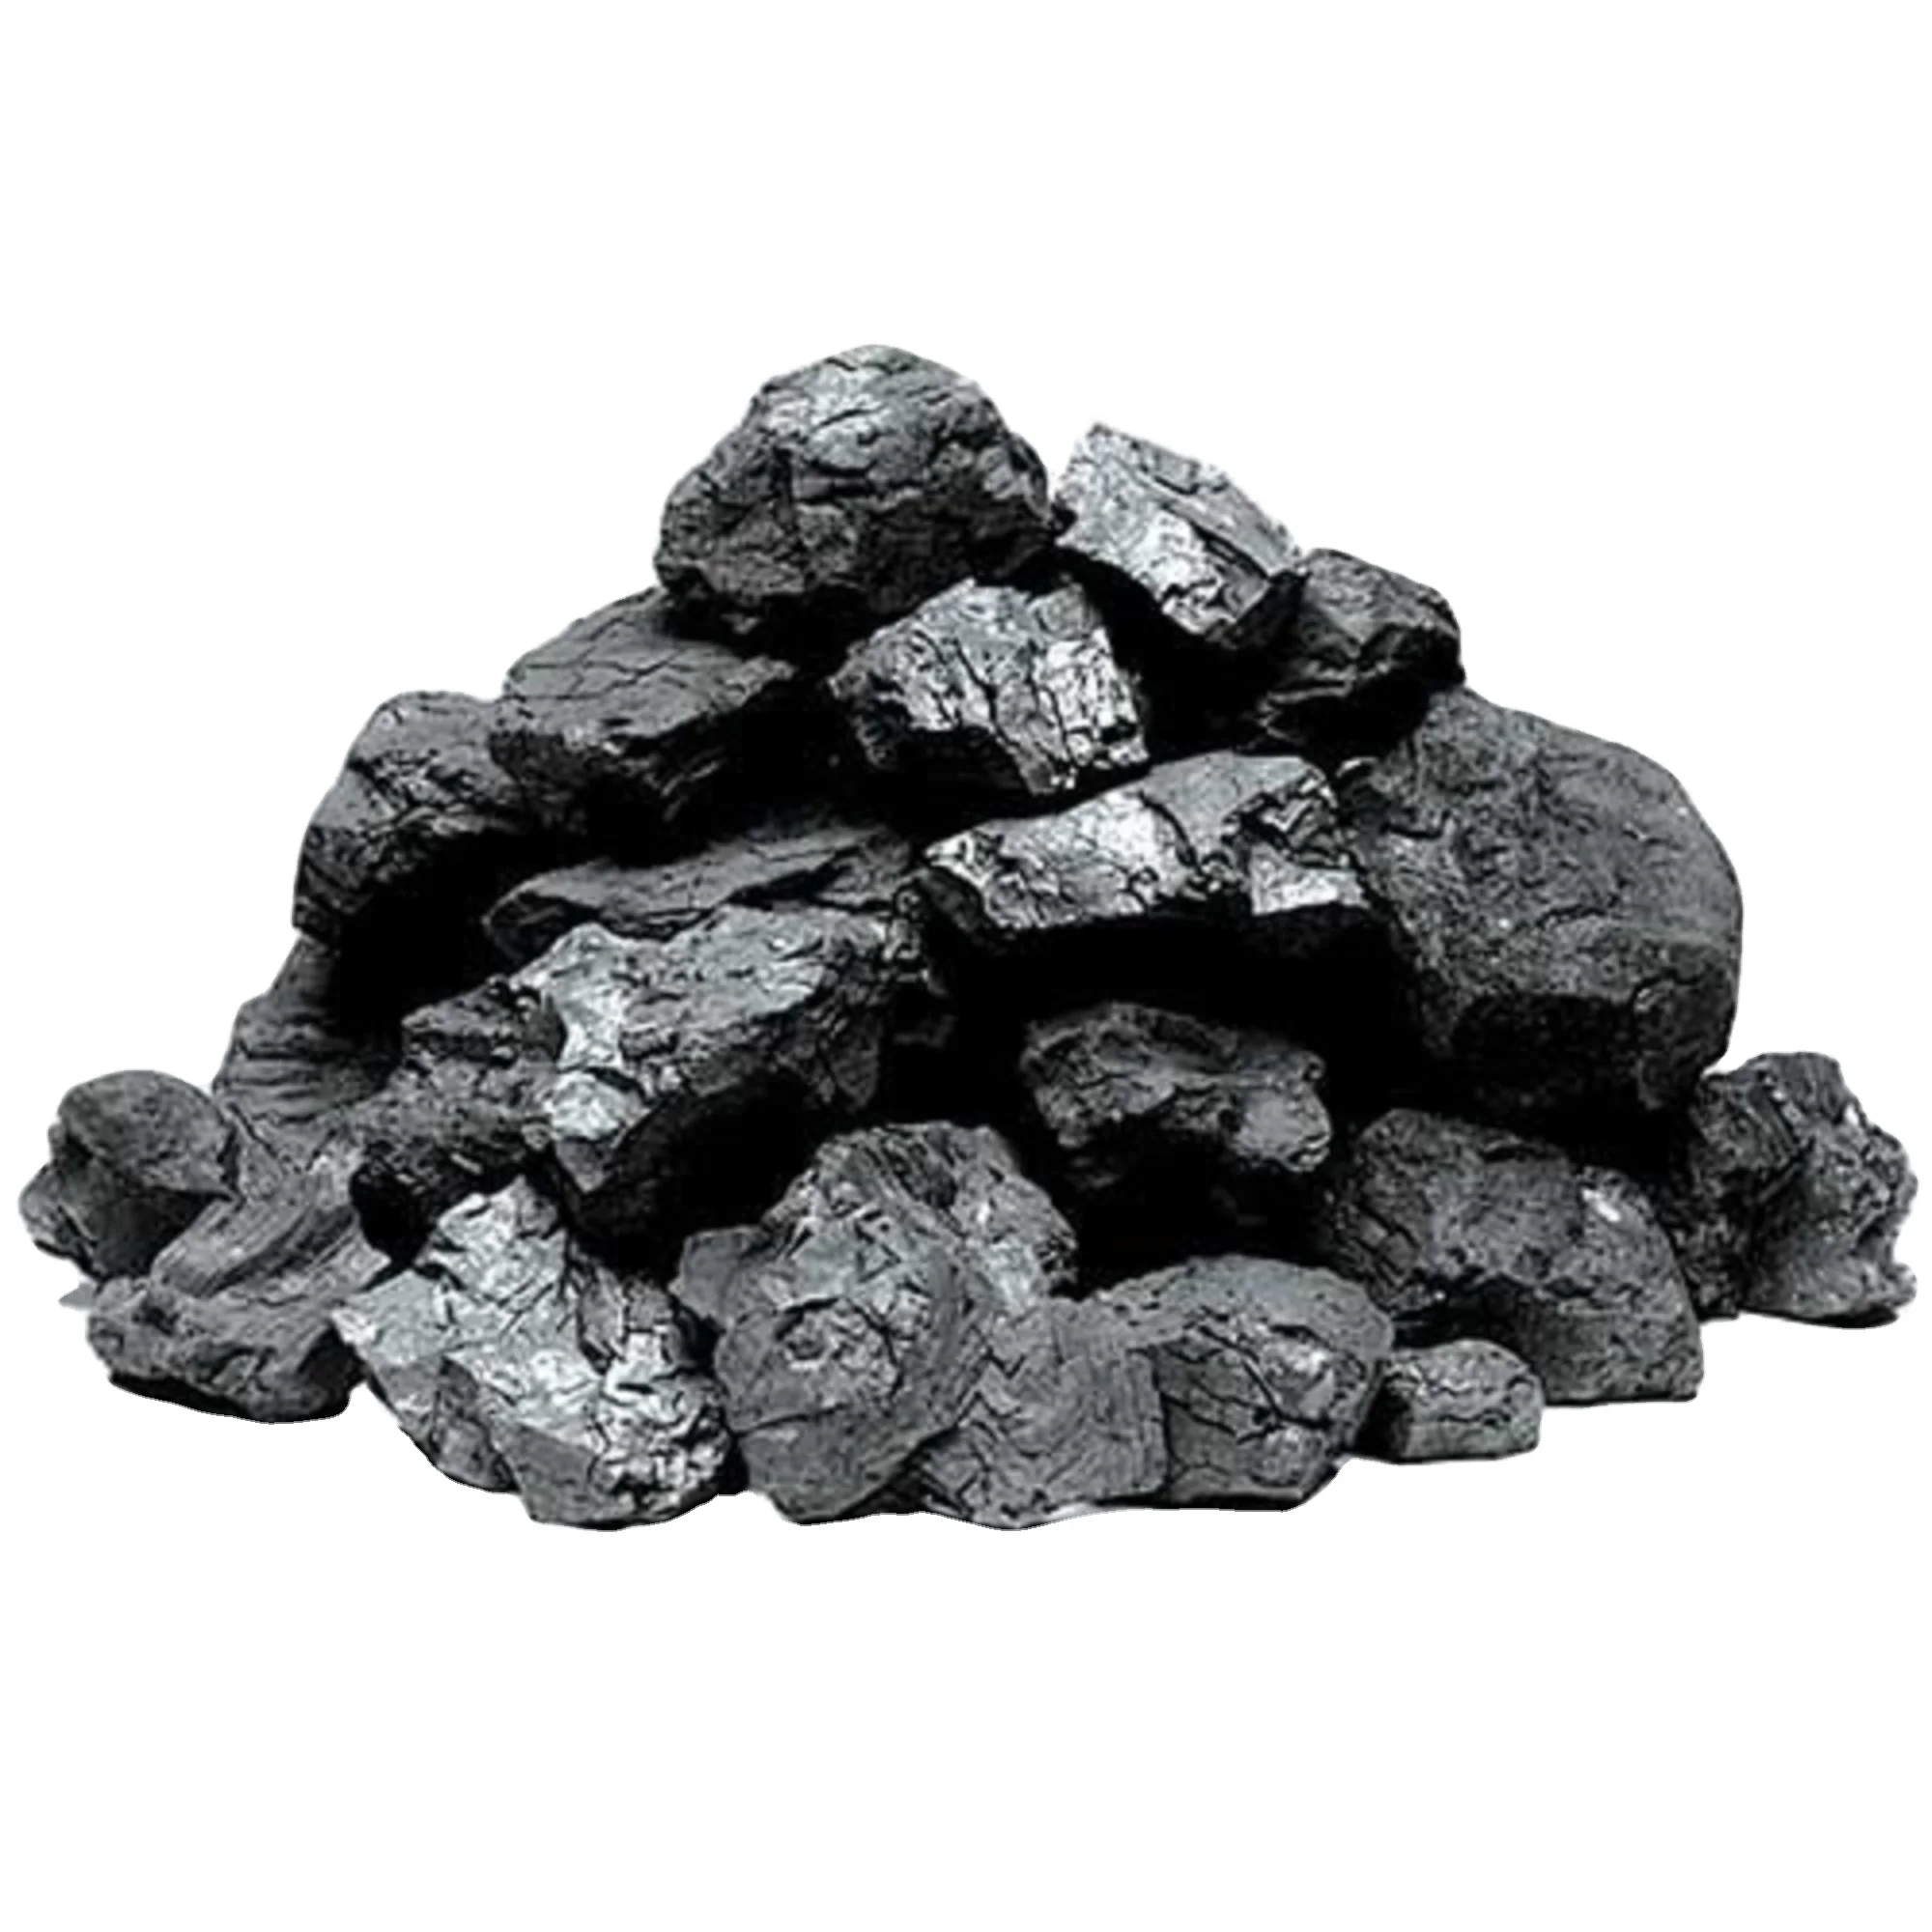 Steam coal buyers фото 34